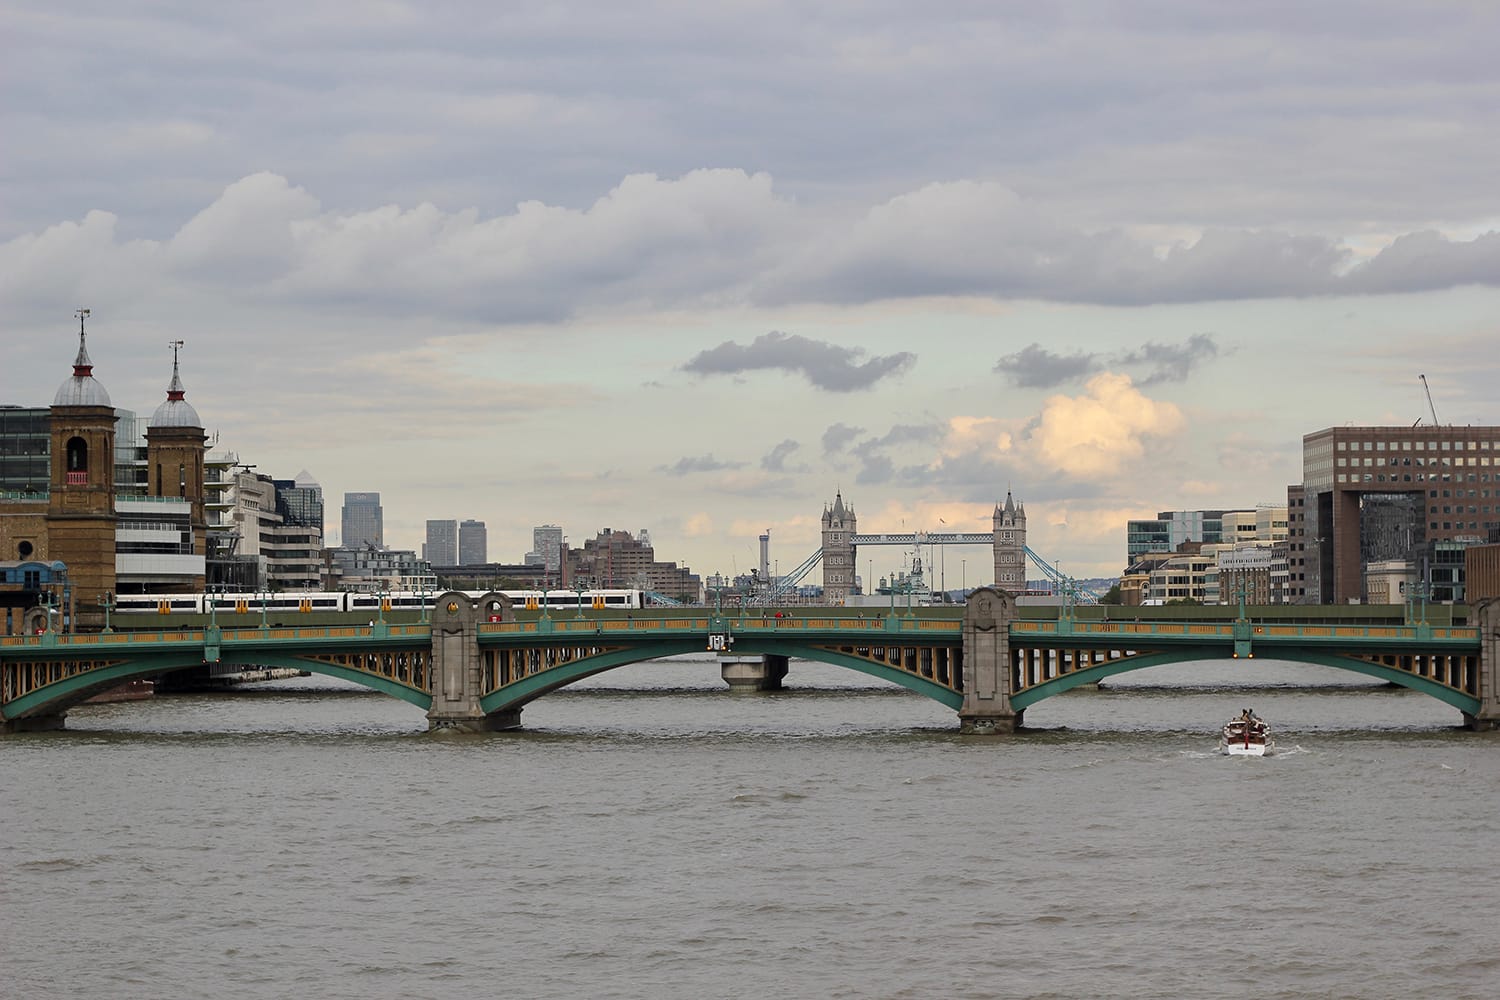 Waterloo Bridge